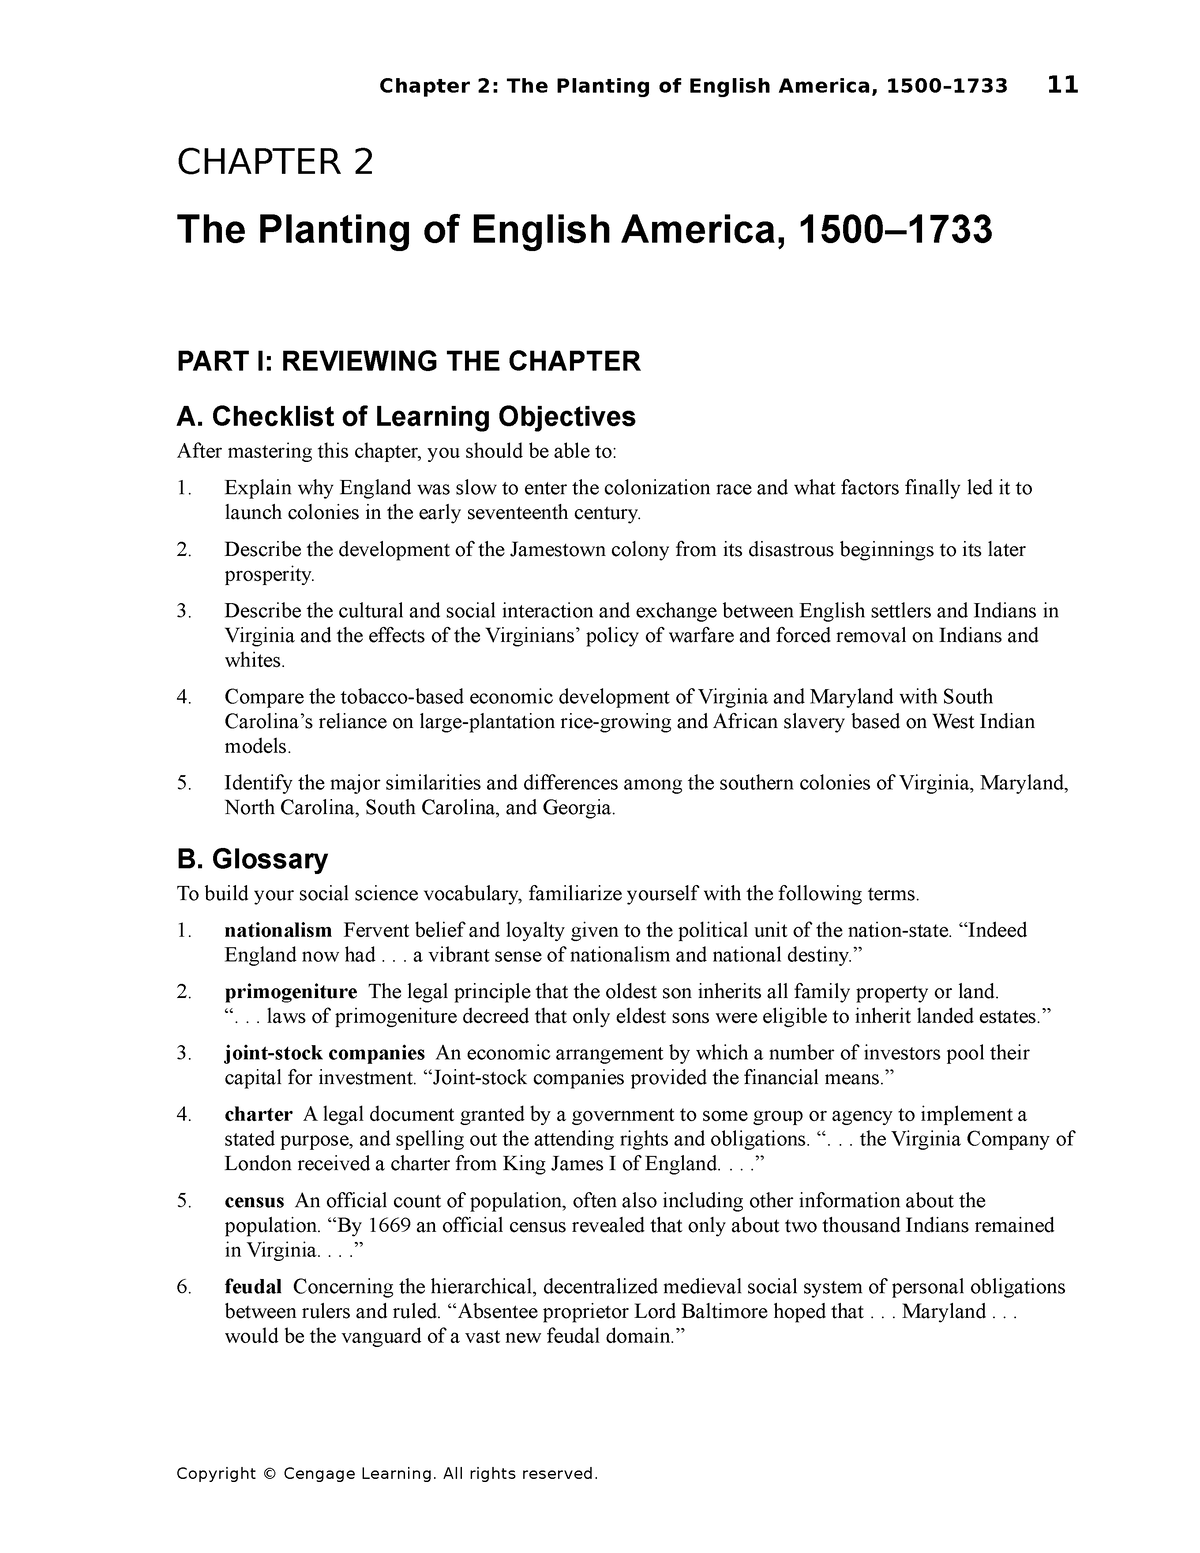 Apush The Planting Of English America Worksheet